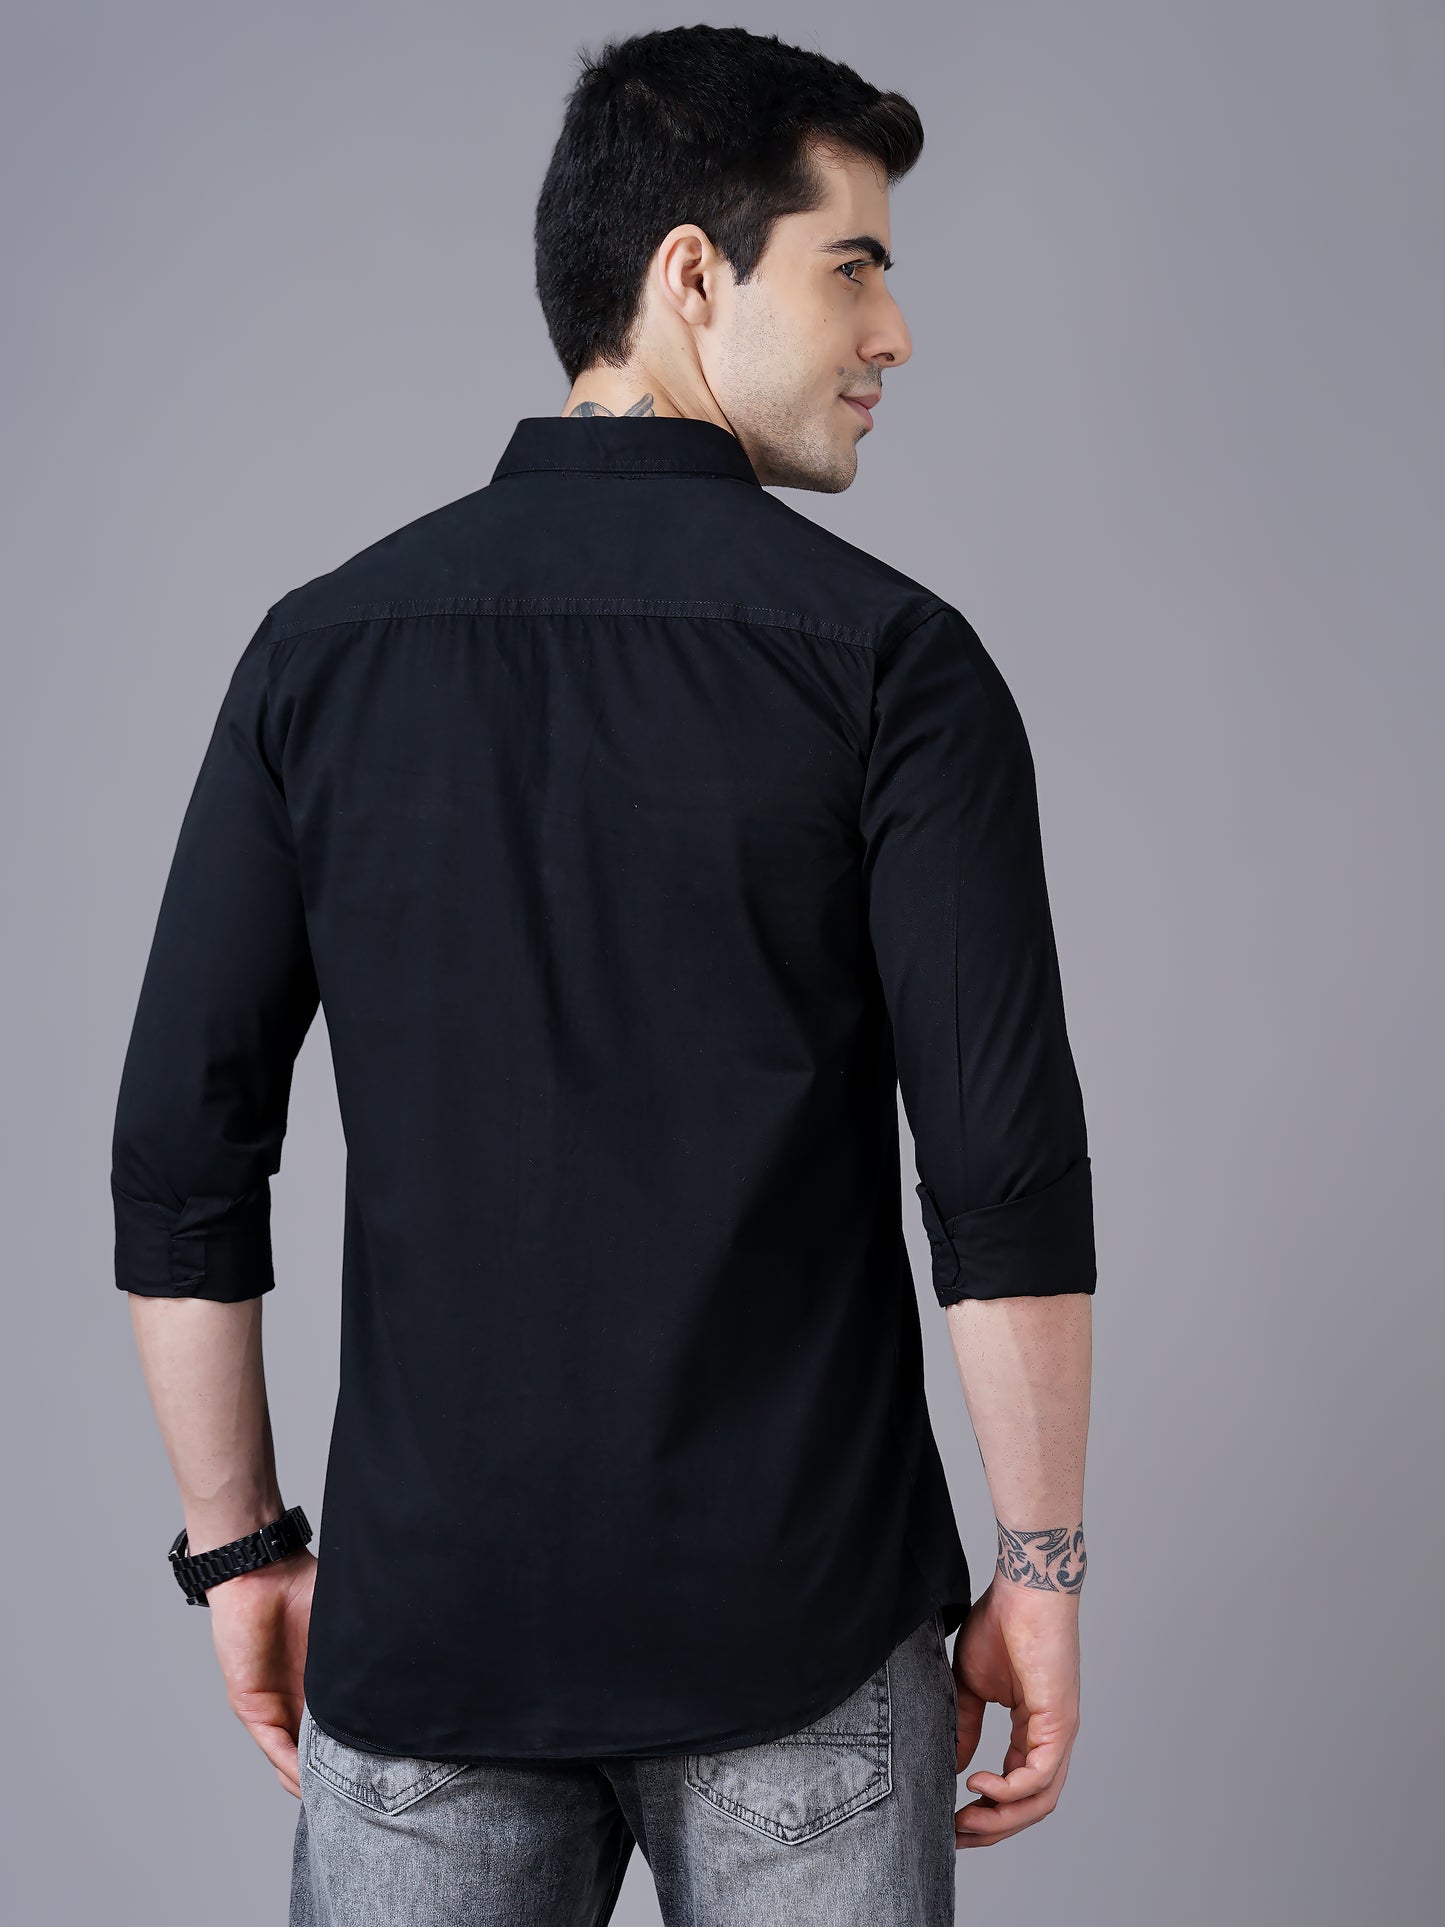 No-Flap Black Shirt